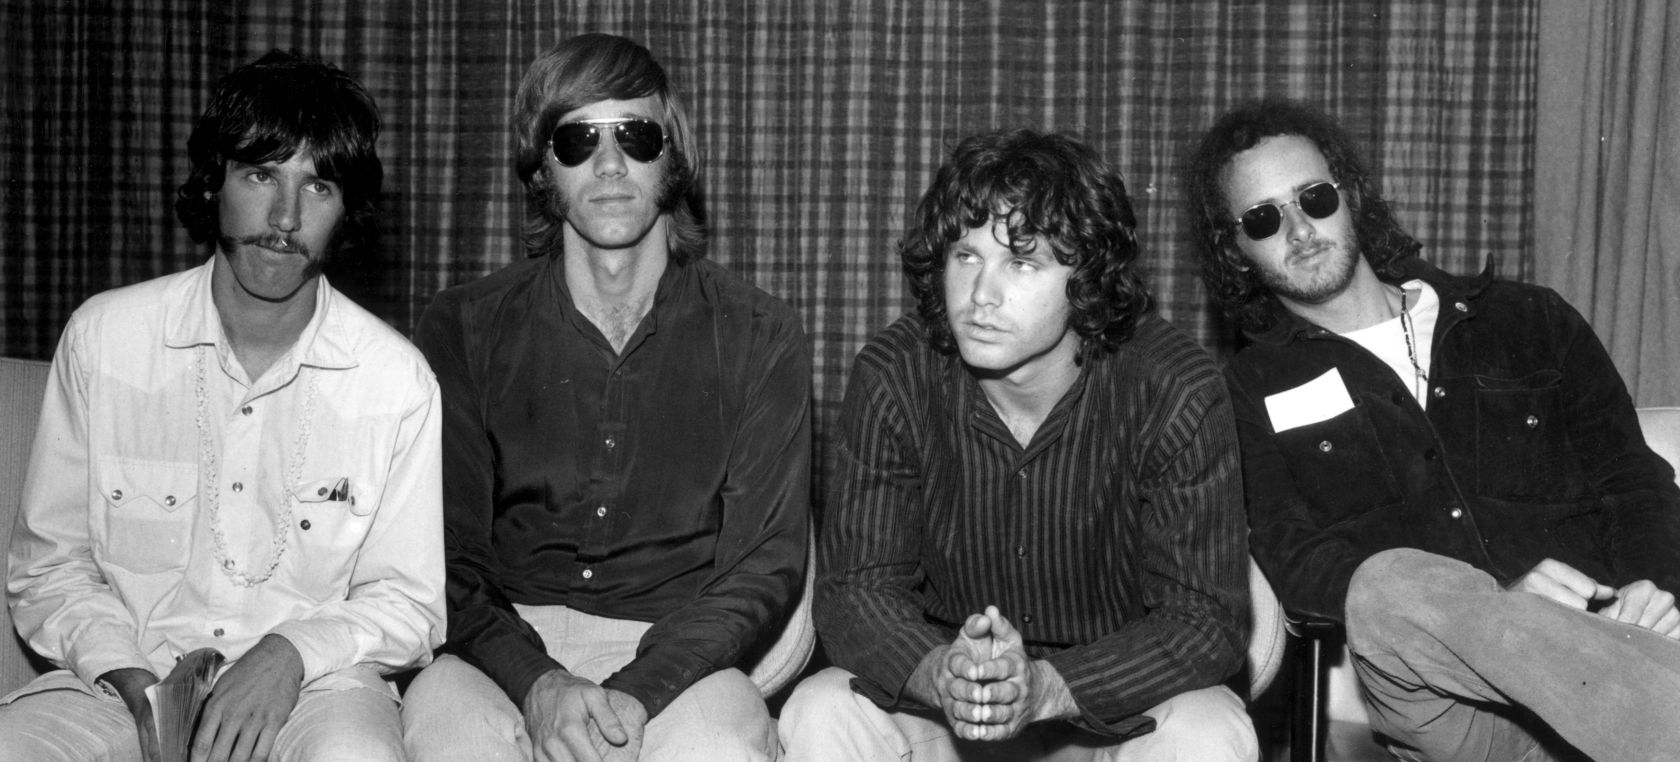 'The Doors': el álbum debut con el que la banda de Jim Morrison hizo historia en el rock